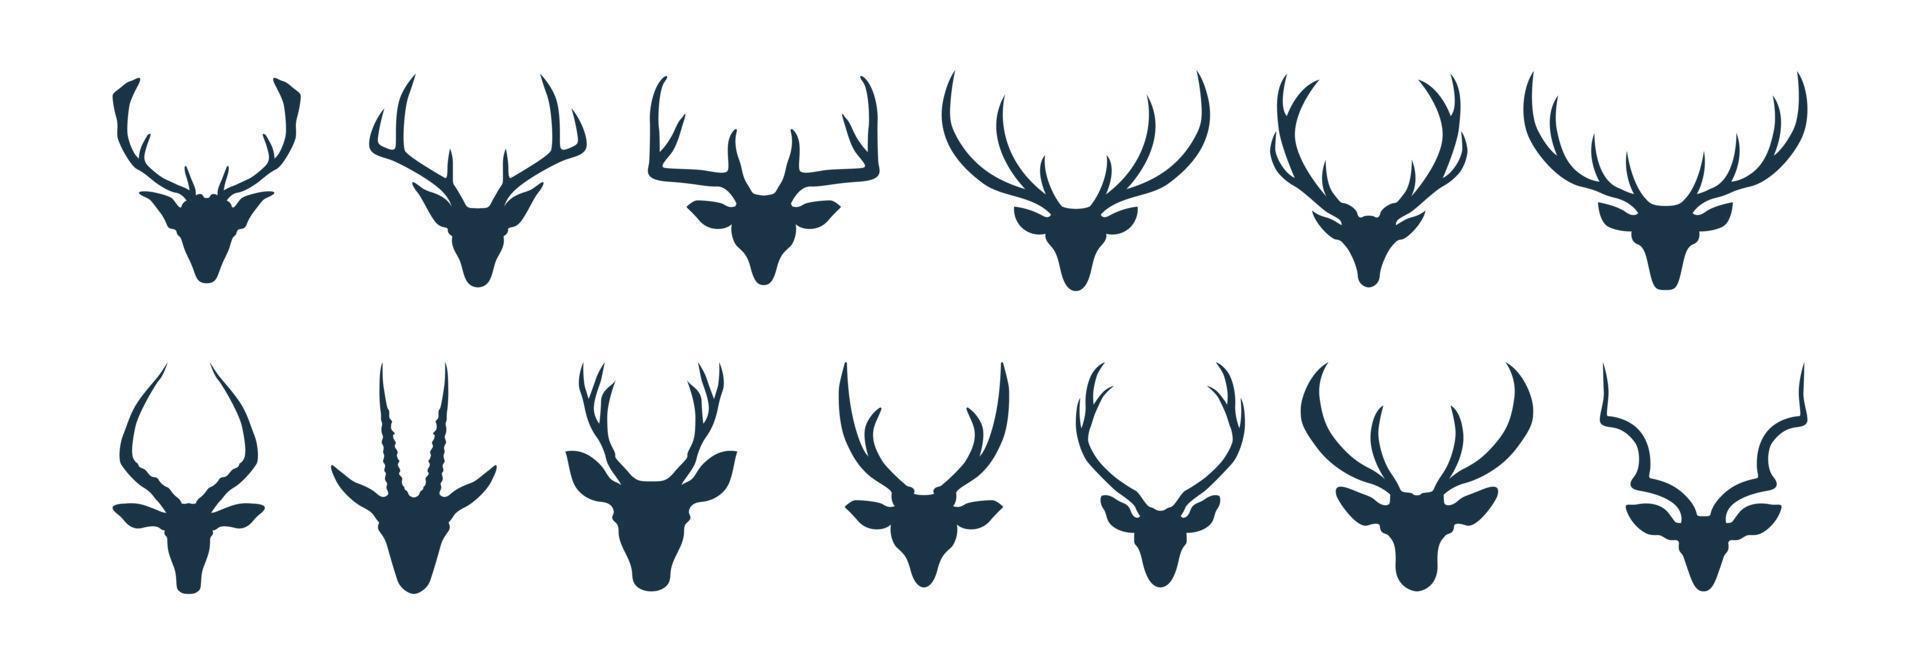 Deer head With Big horn illustration vector